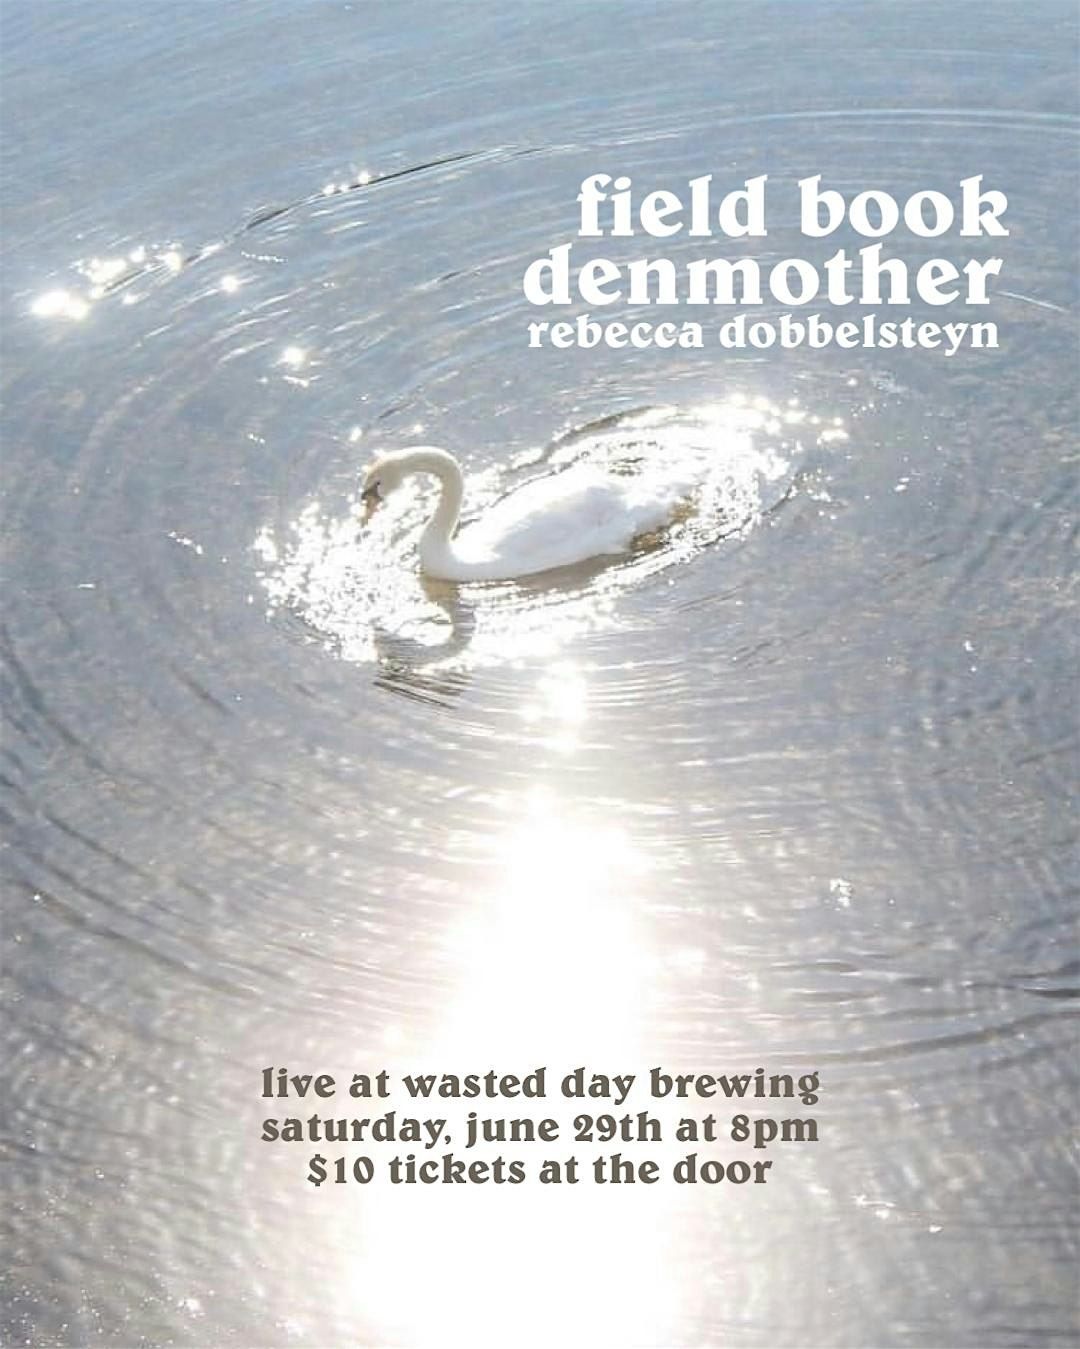 Field Book, Den Mother, and Rebecca Dobbelsteyn